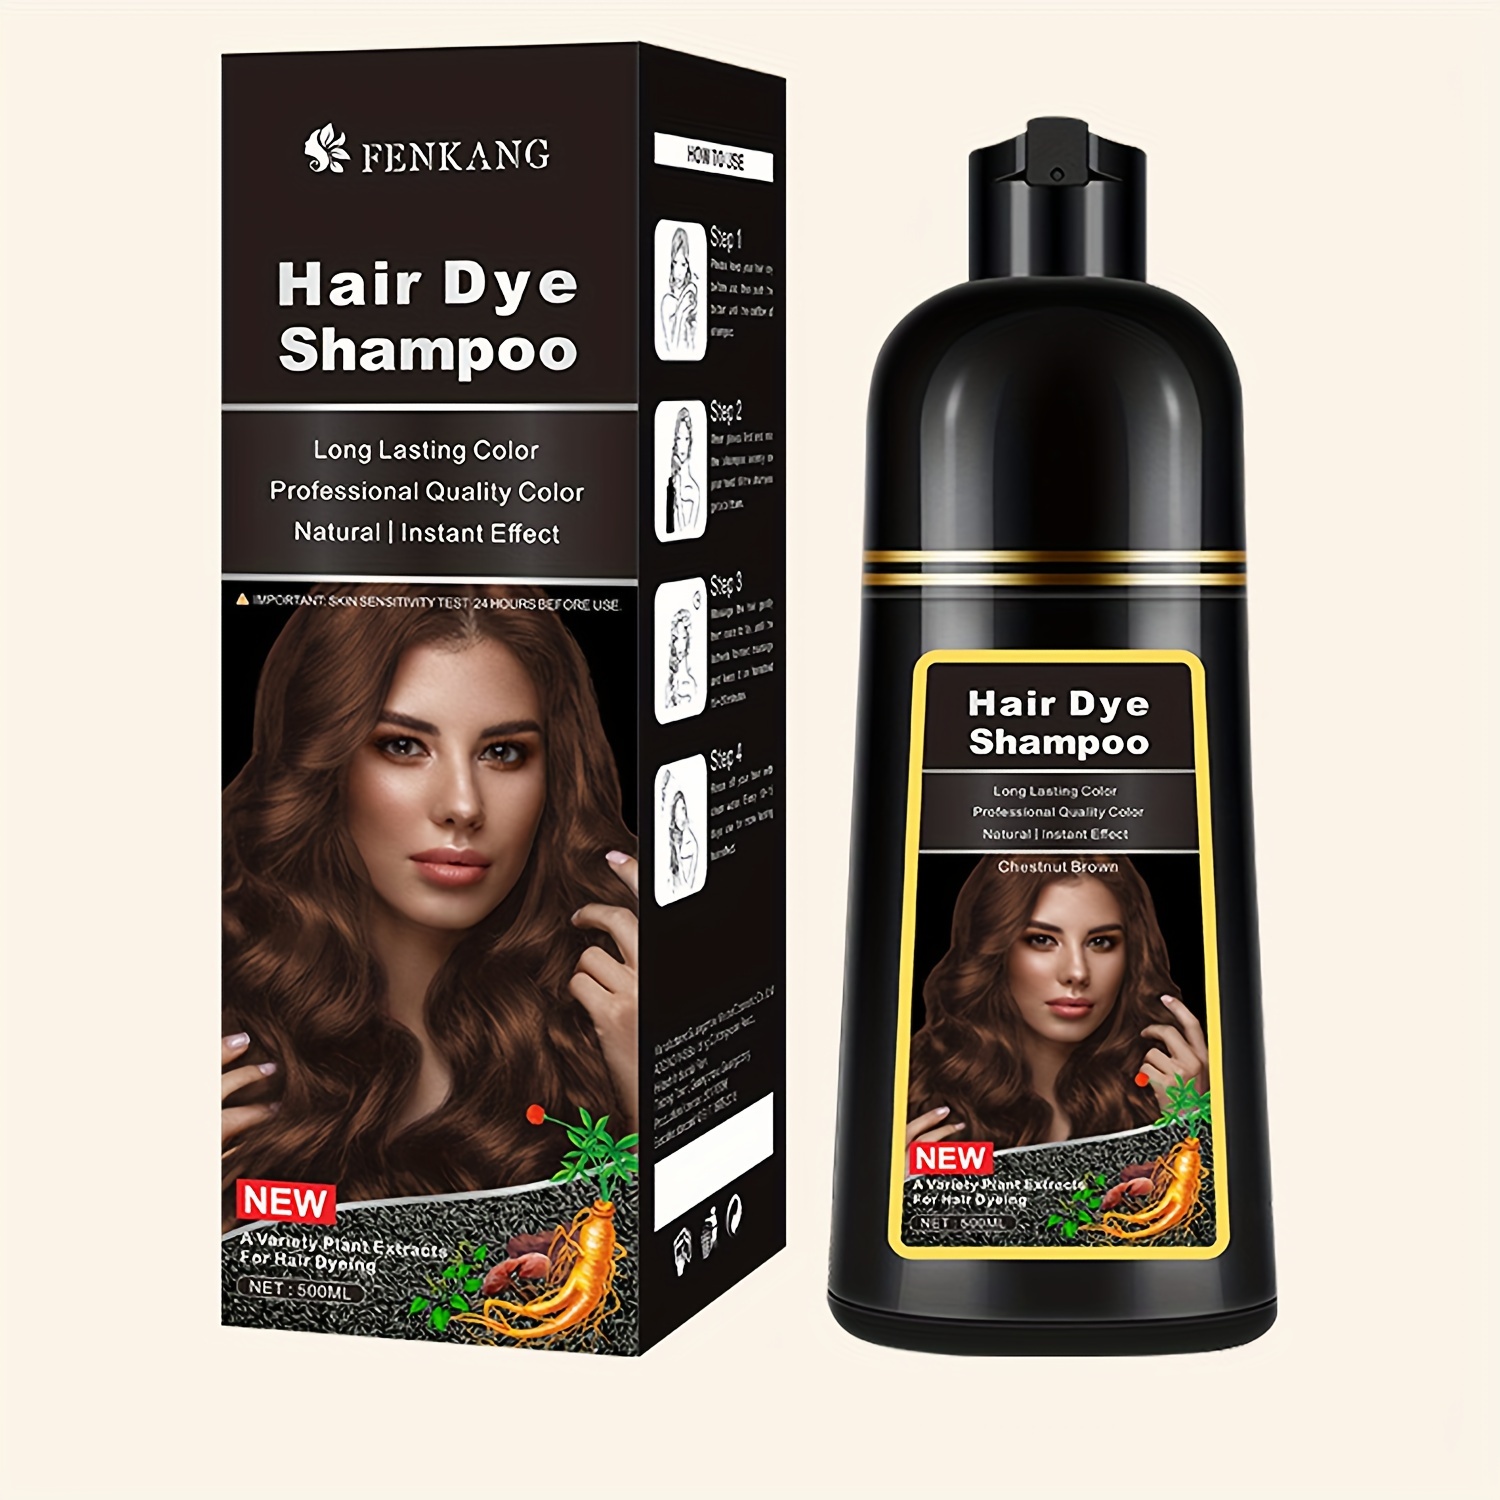 

Hair Color Shampoo, 3 In 1 Hair Dye Shampoo, Herbal Natural Fast Hair Coloring Shampoo For Men Women